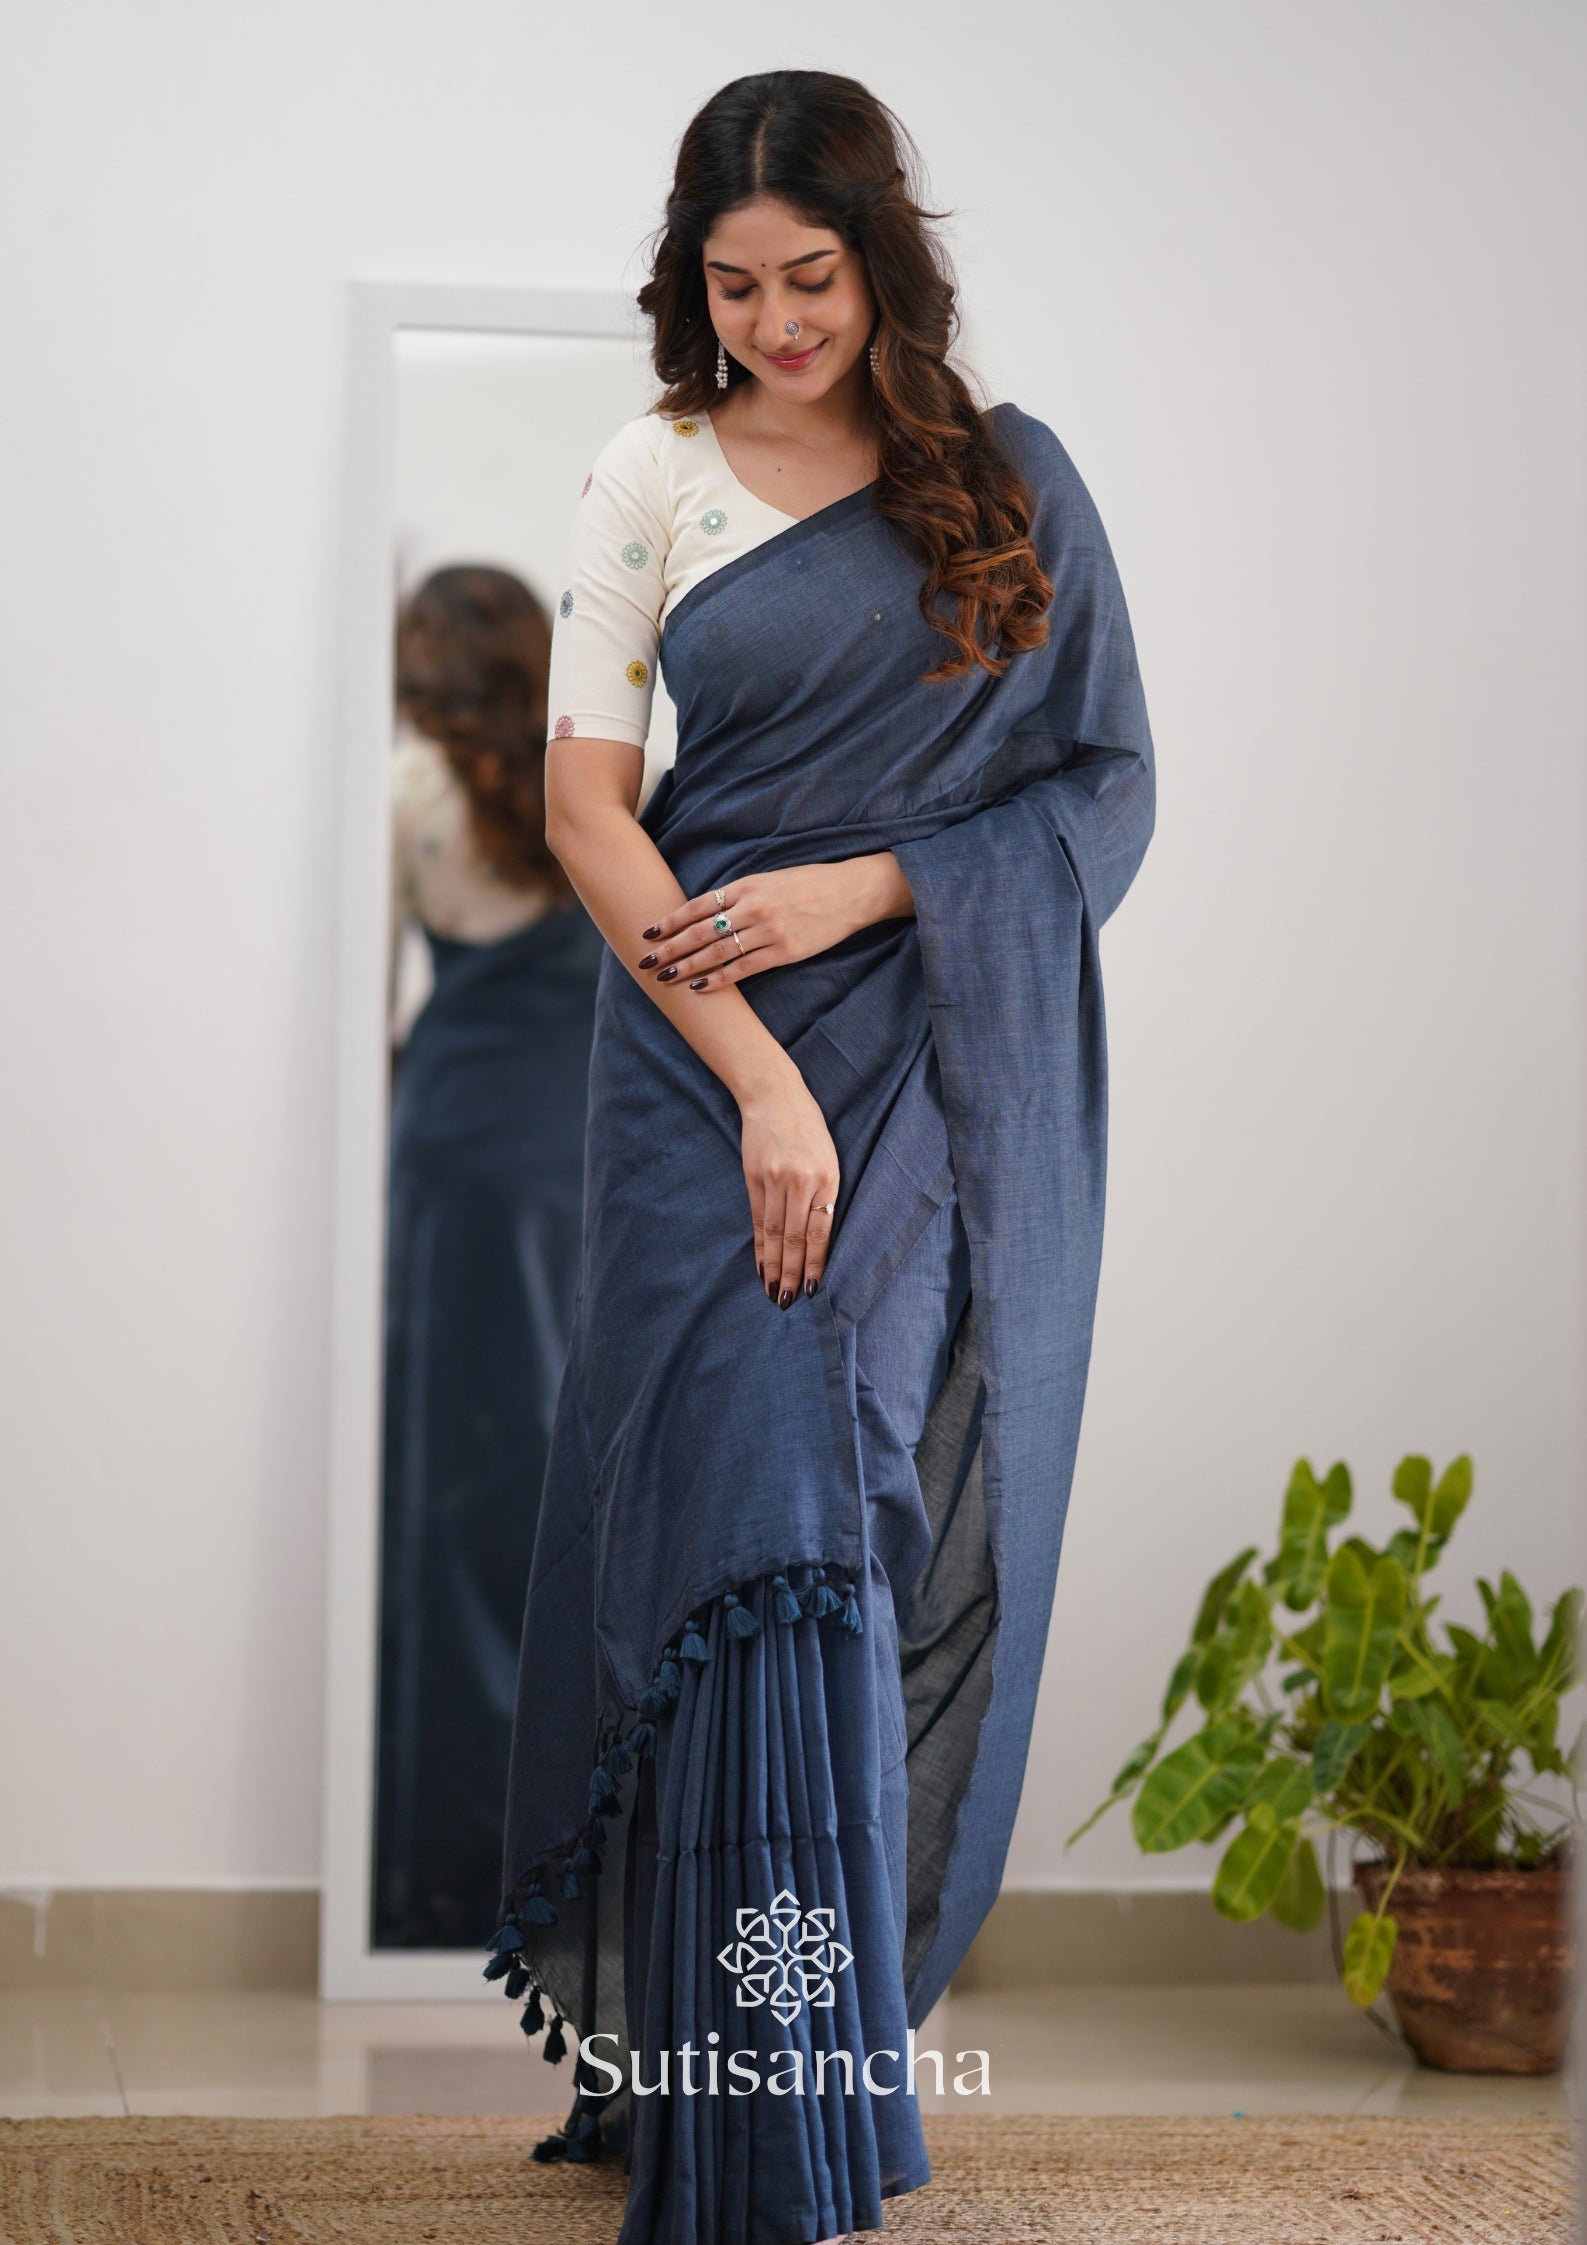 Sutisancha Grey Handloom Cotton Saree With Designer Blouse